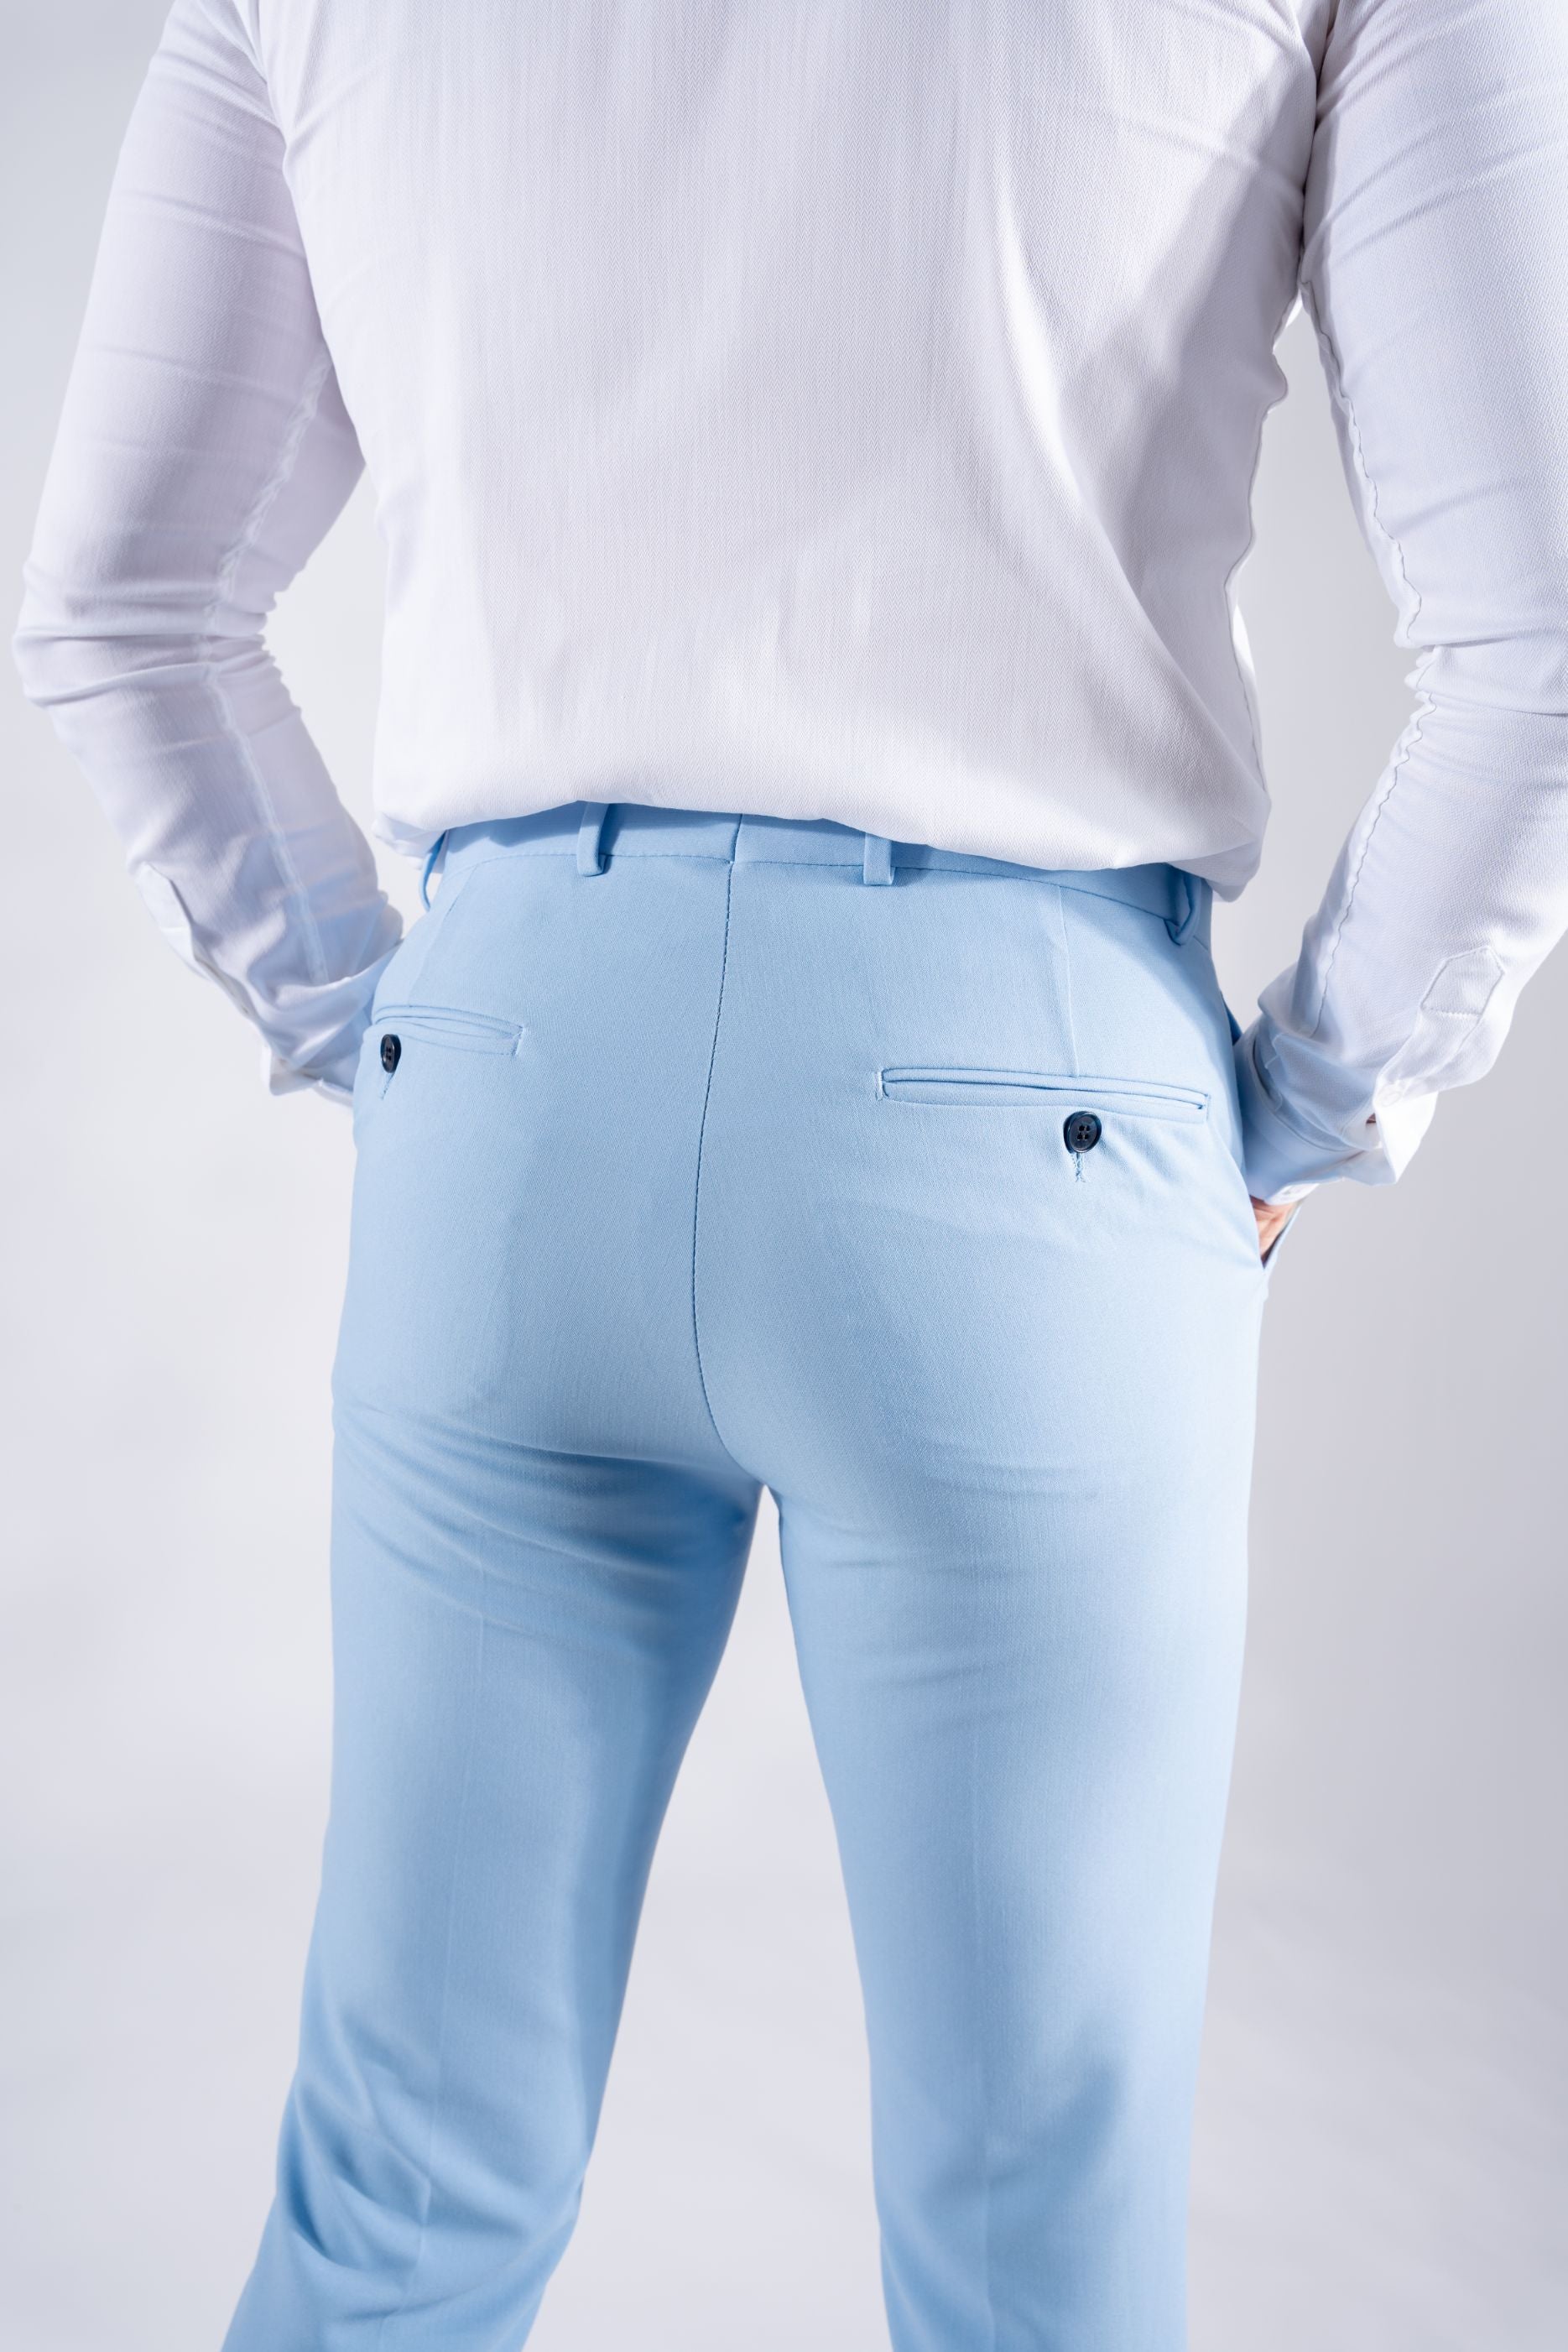 pantalon Chic slim fit licht blauw